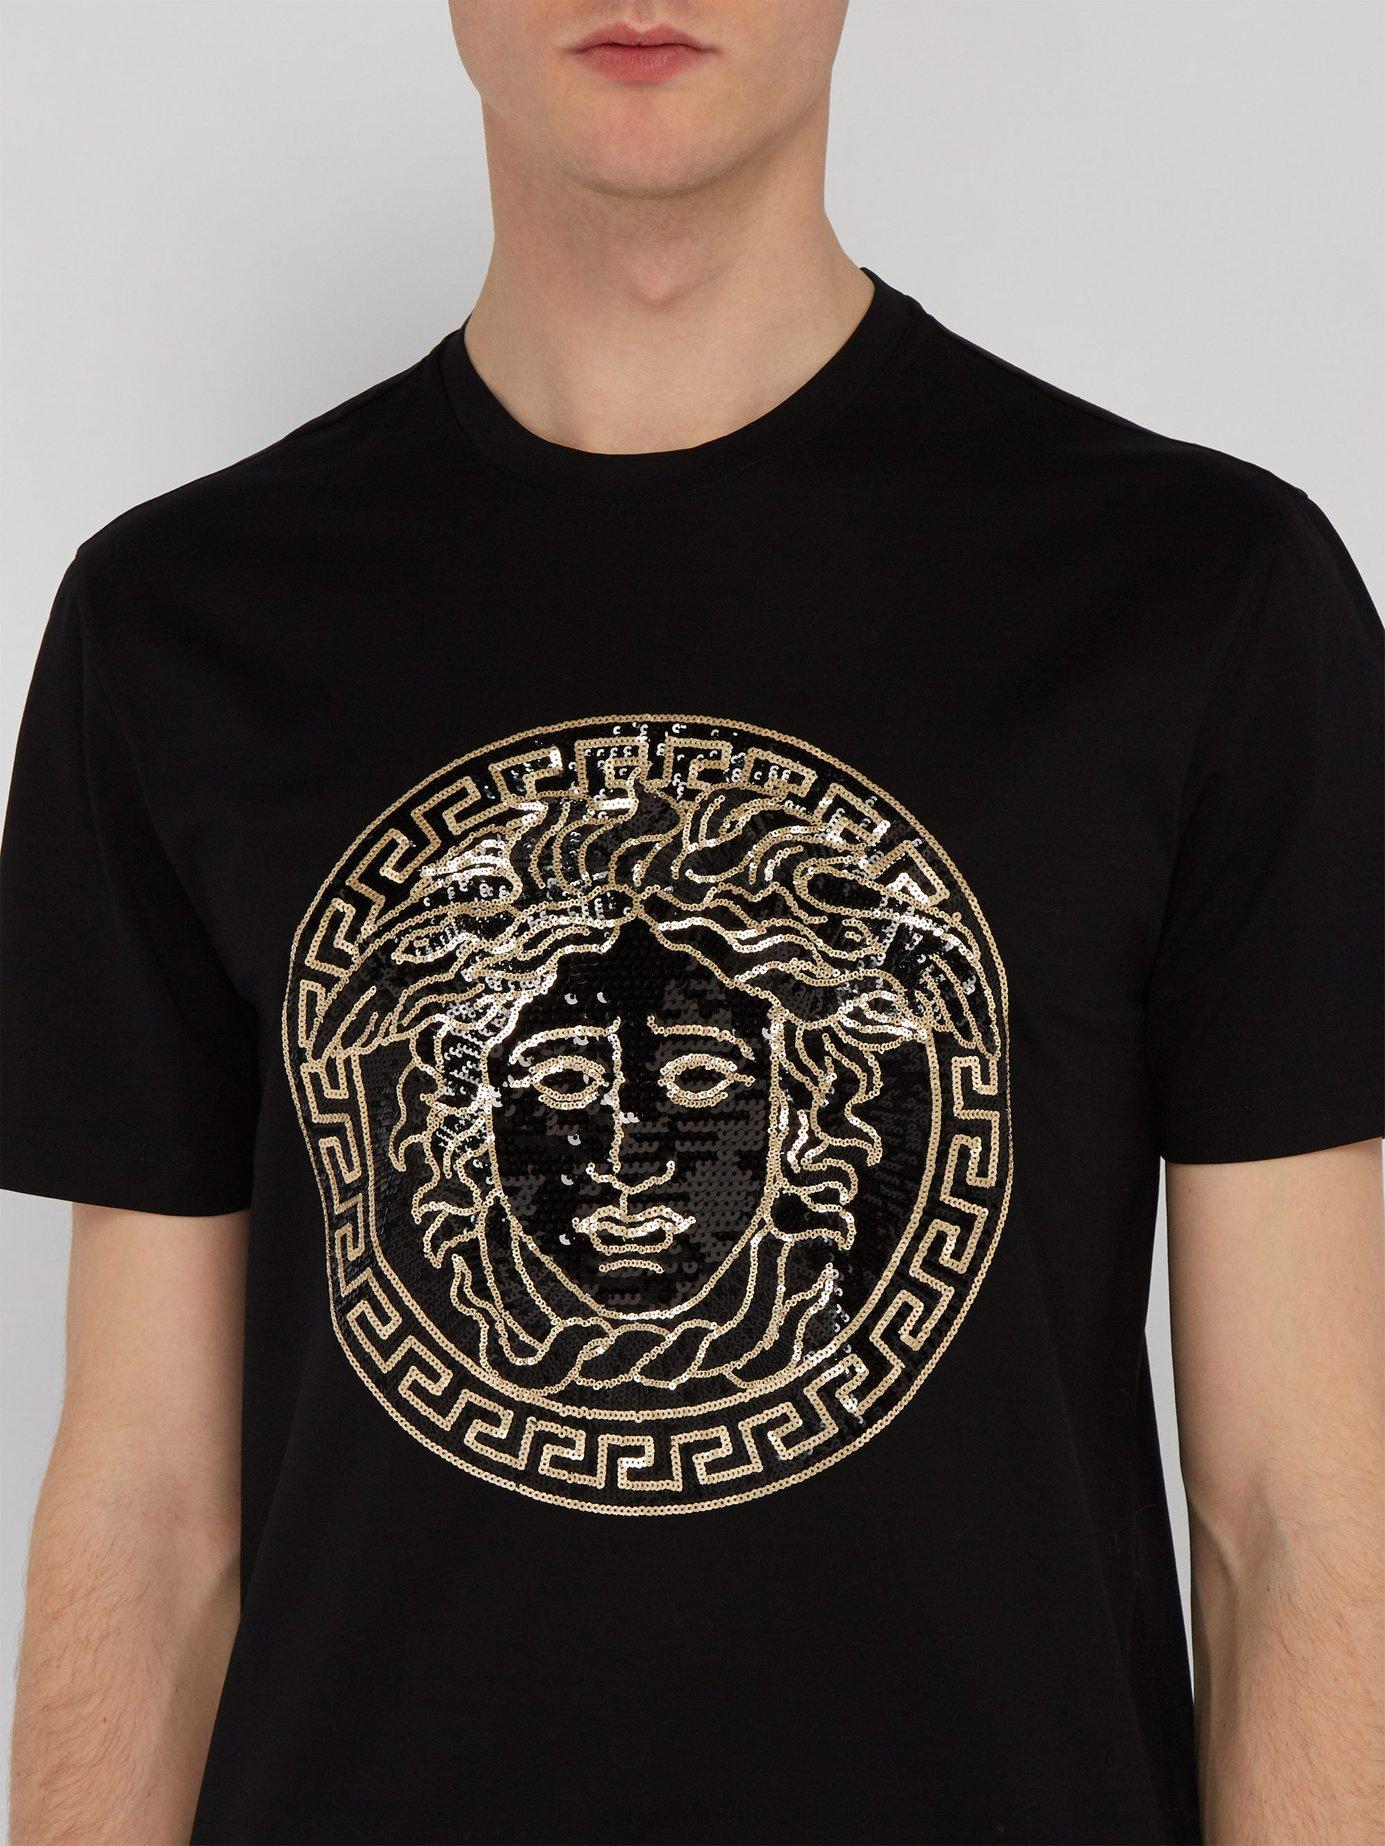 Versace Cotton Medusa Head Sequinned Motif T Shirt in Black for Men - Lyst